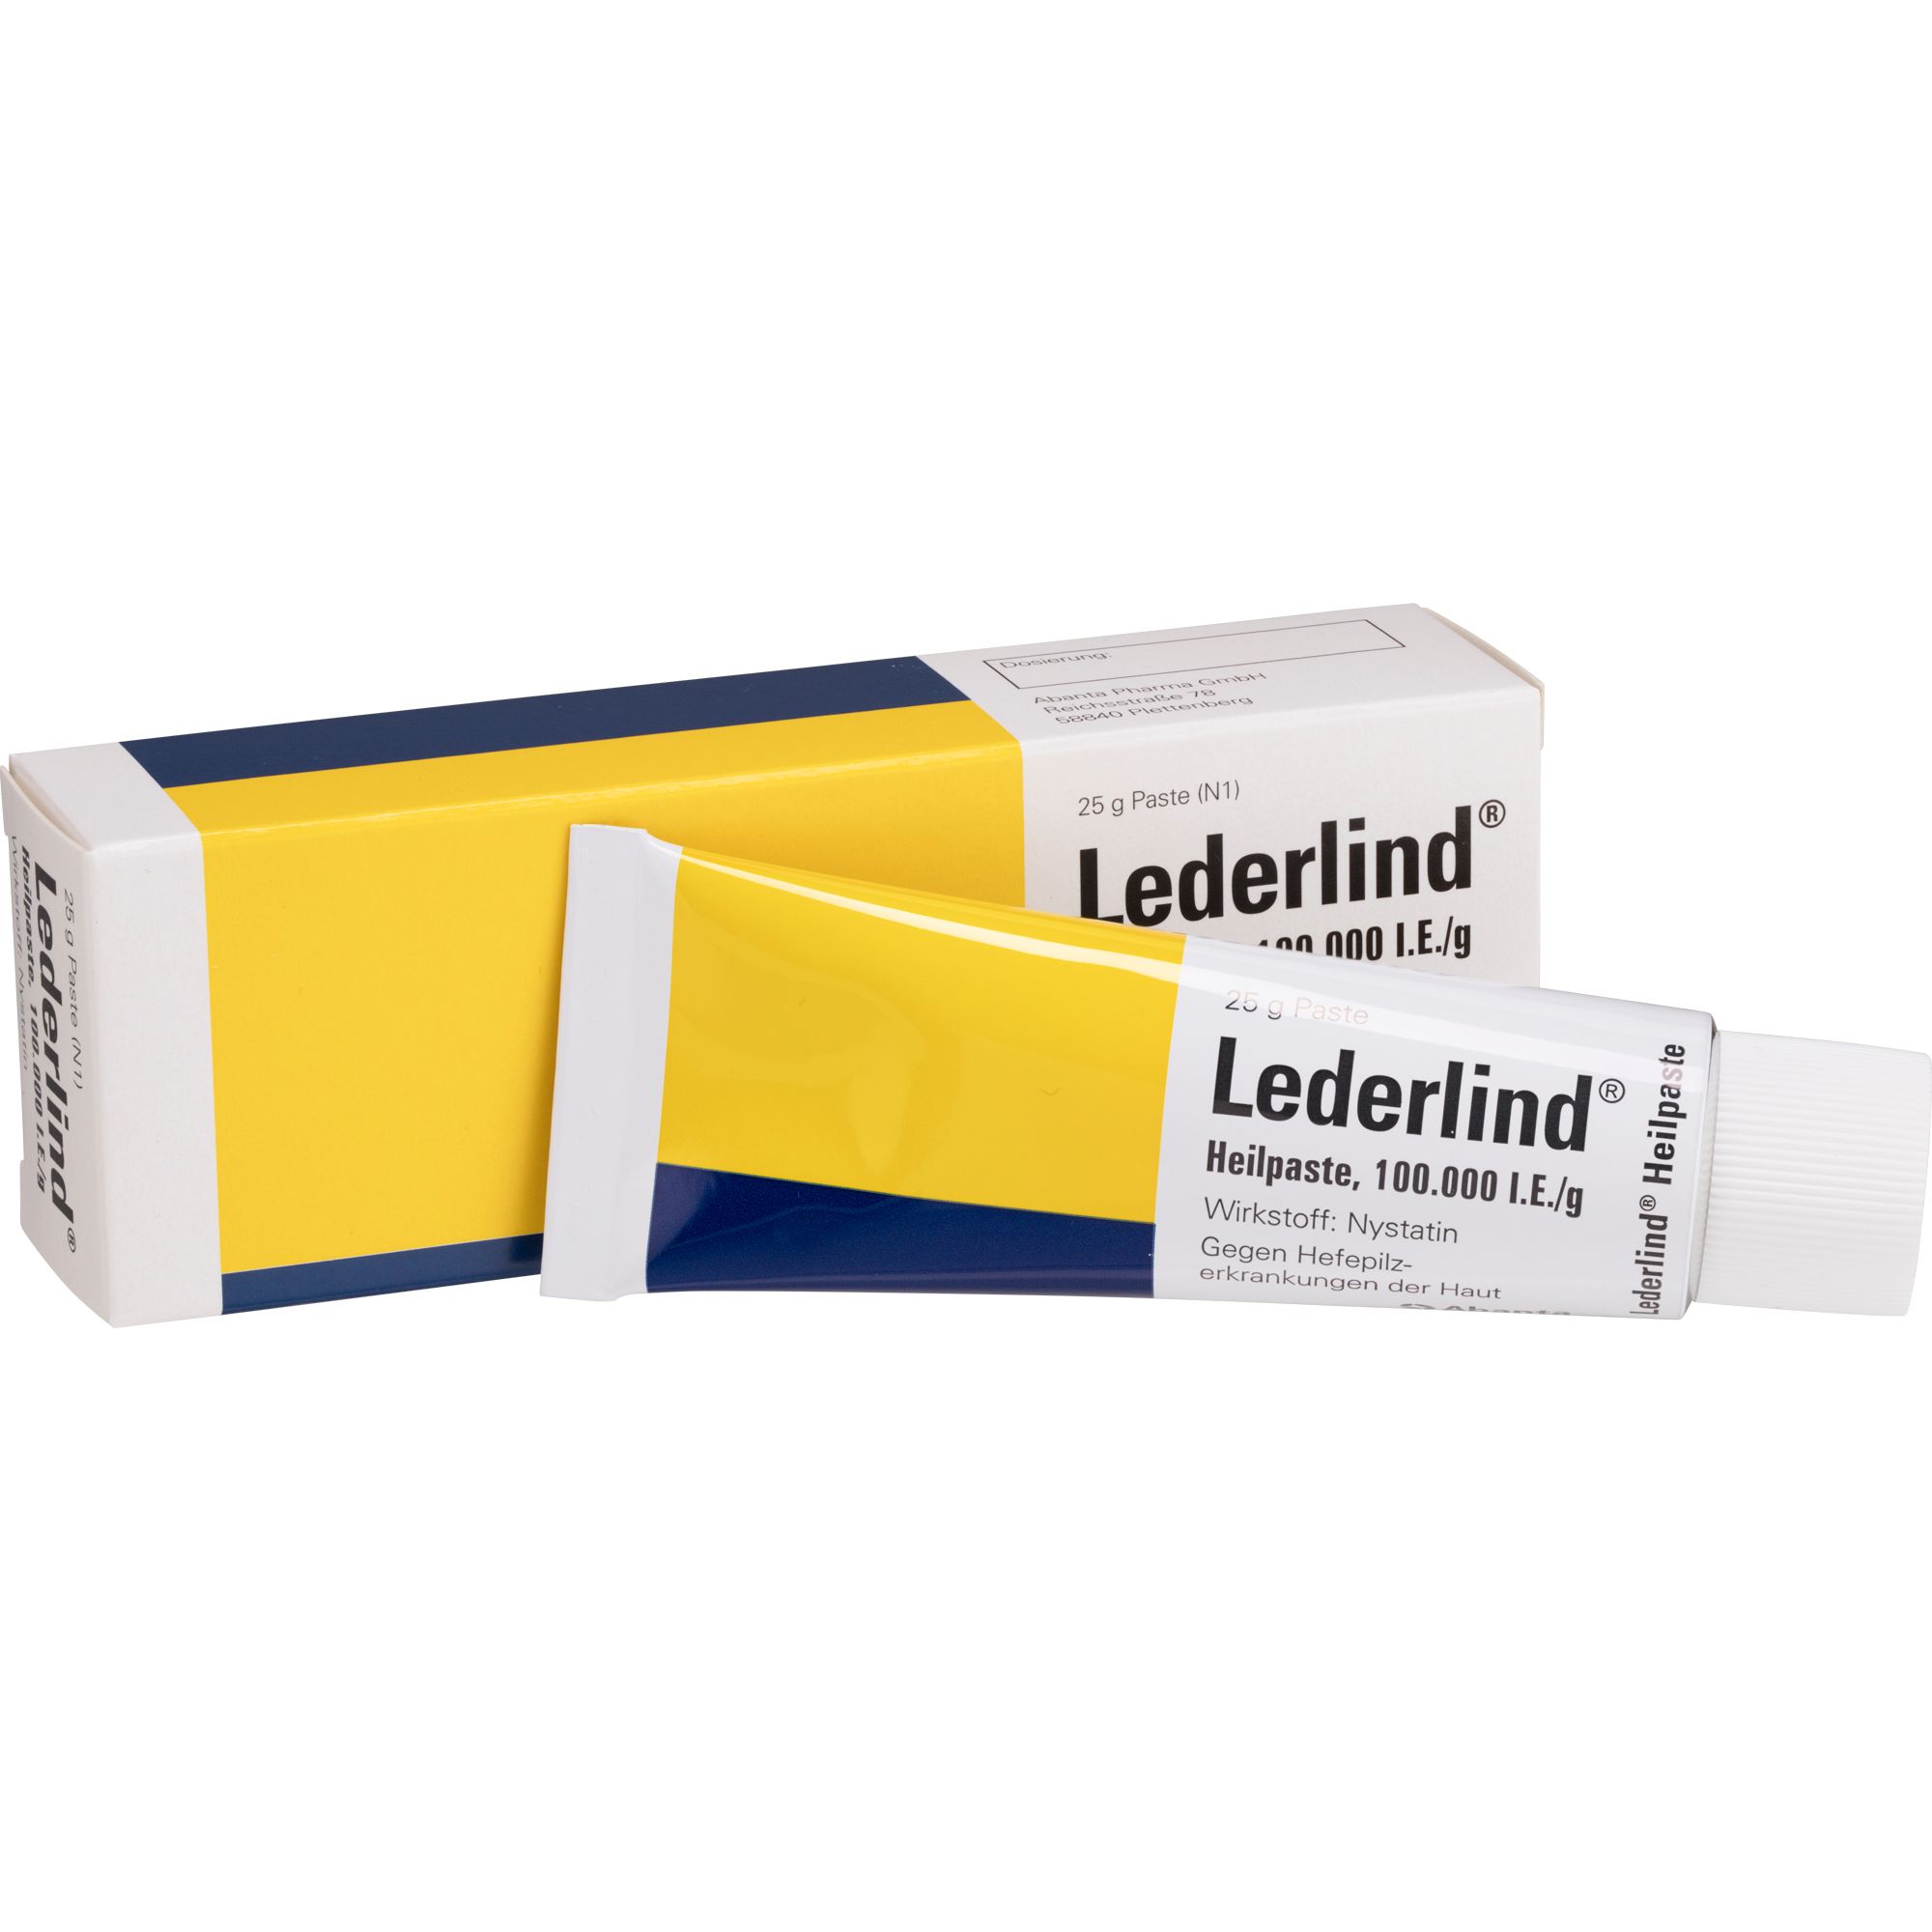 Lederlind® Heilpaste 100.000 I.E./g